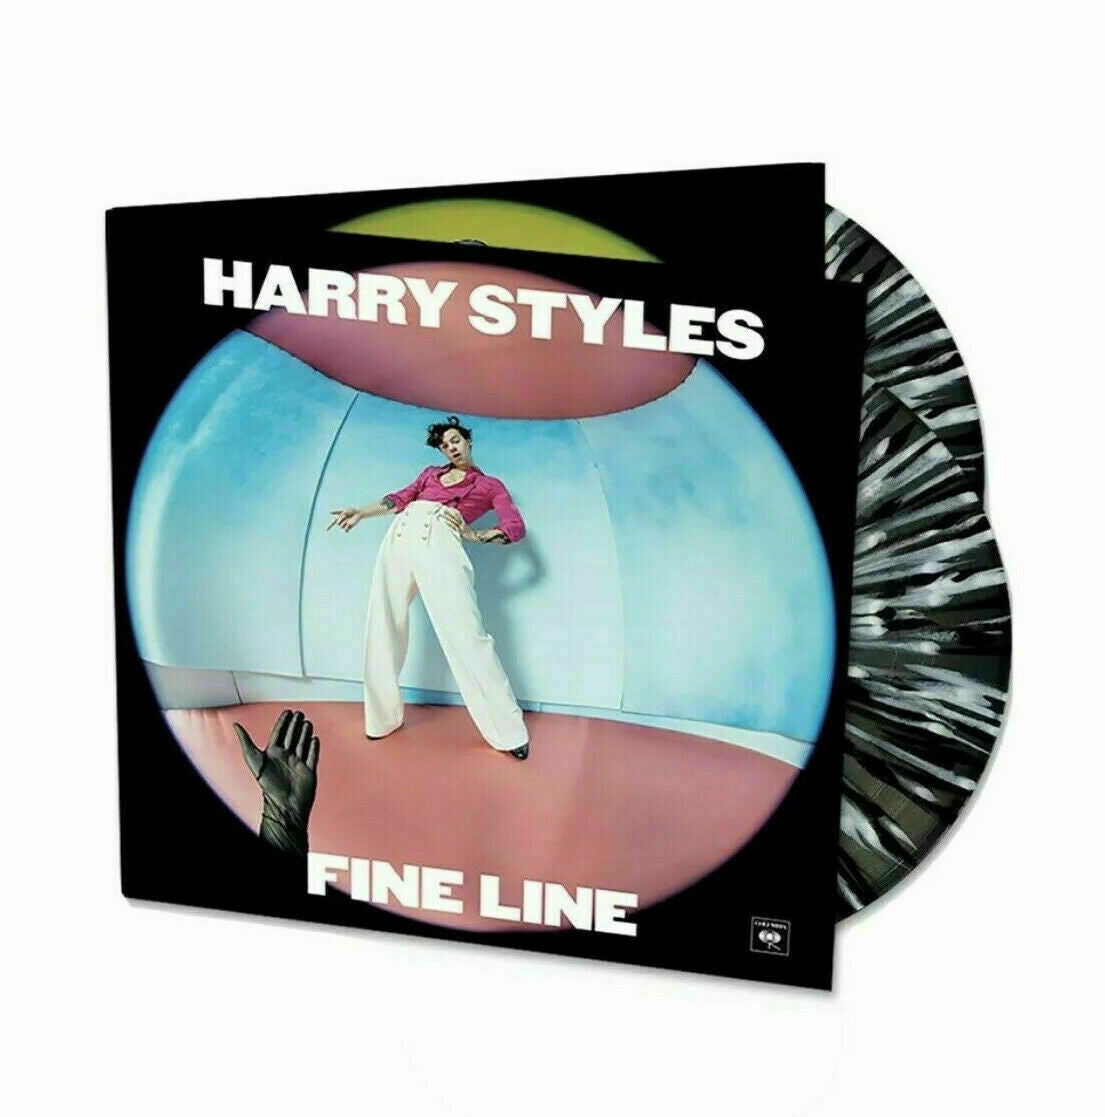 Harry Styles - Fine Line: Limited Black White Splatter 2LP - Sound of Vinyl